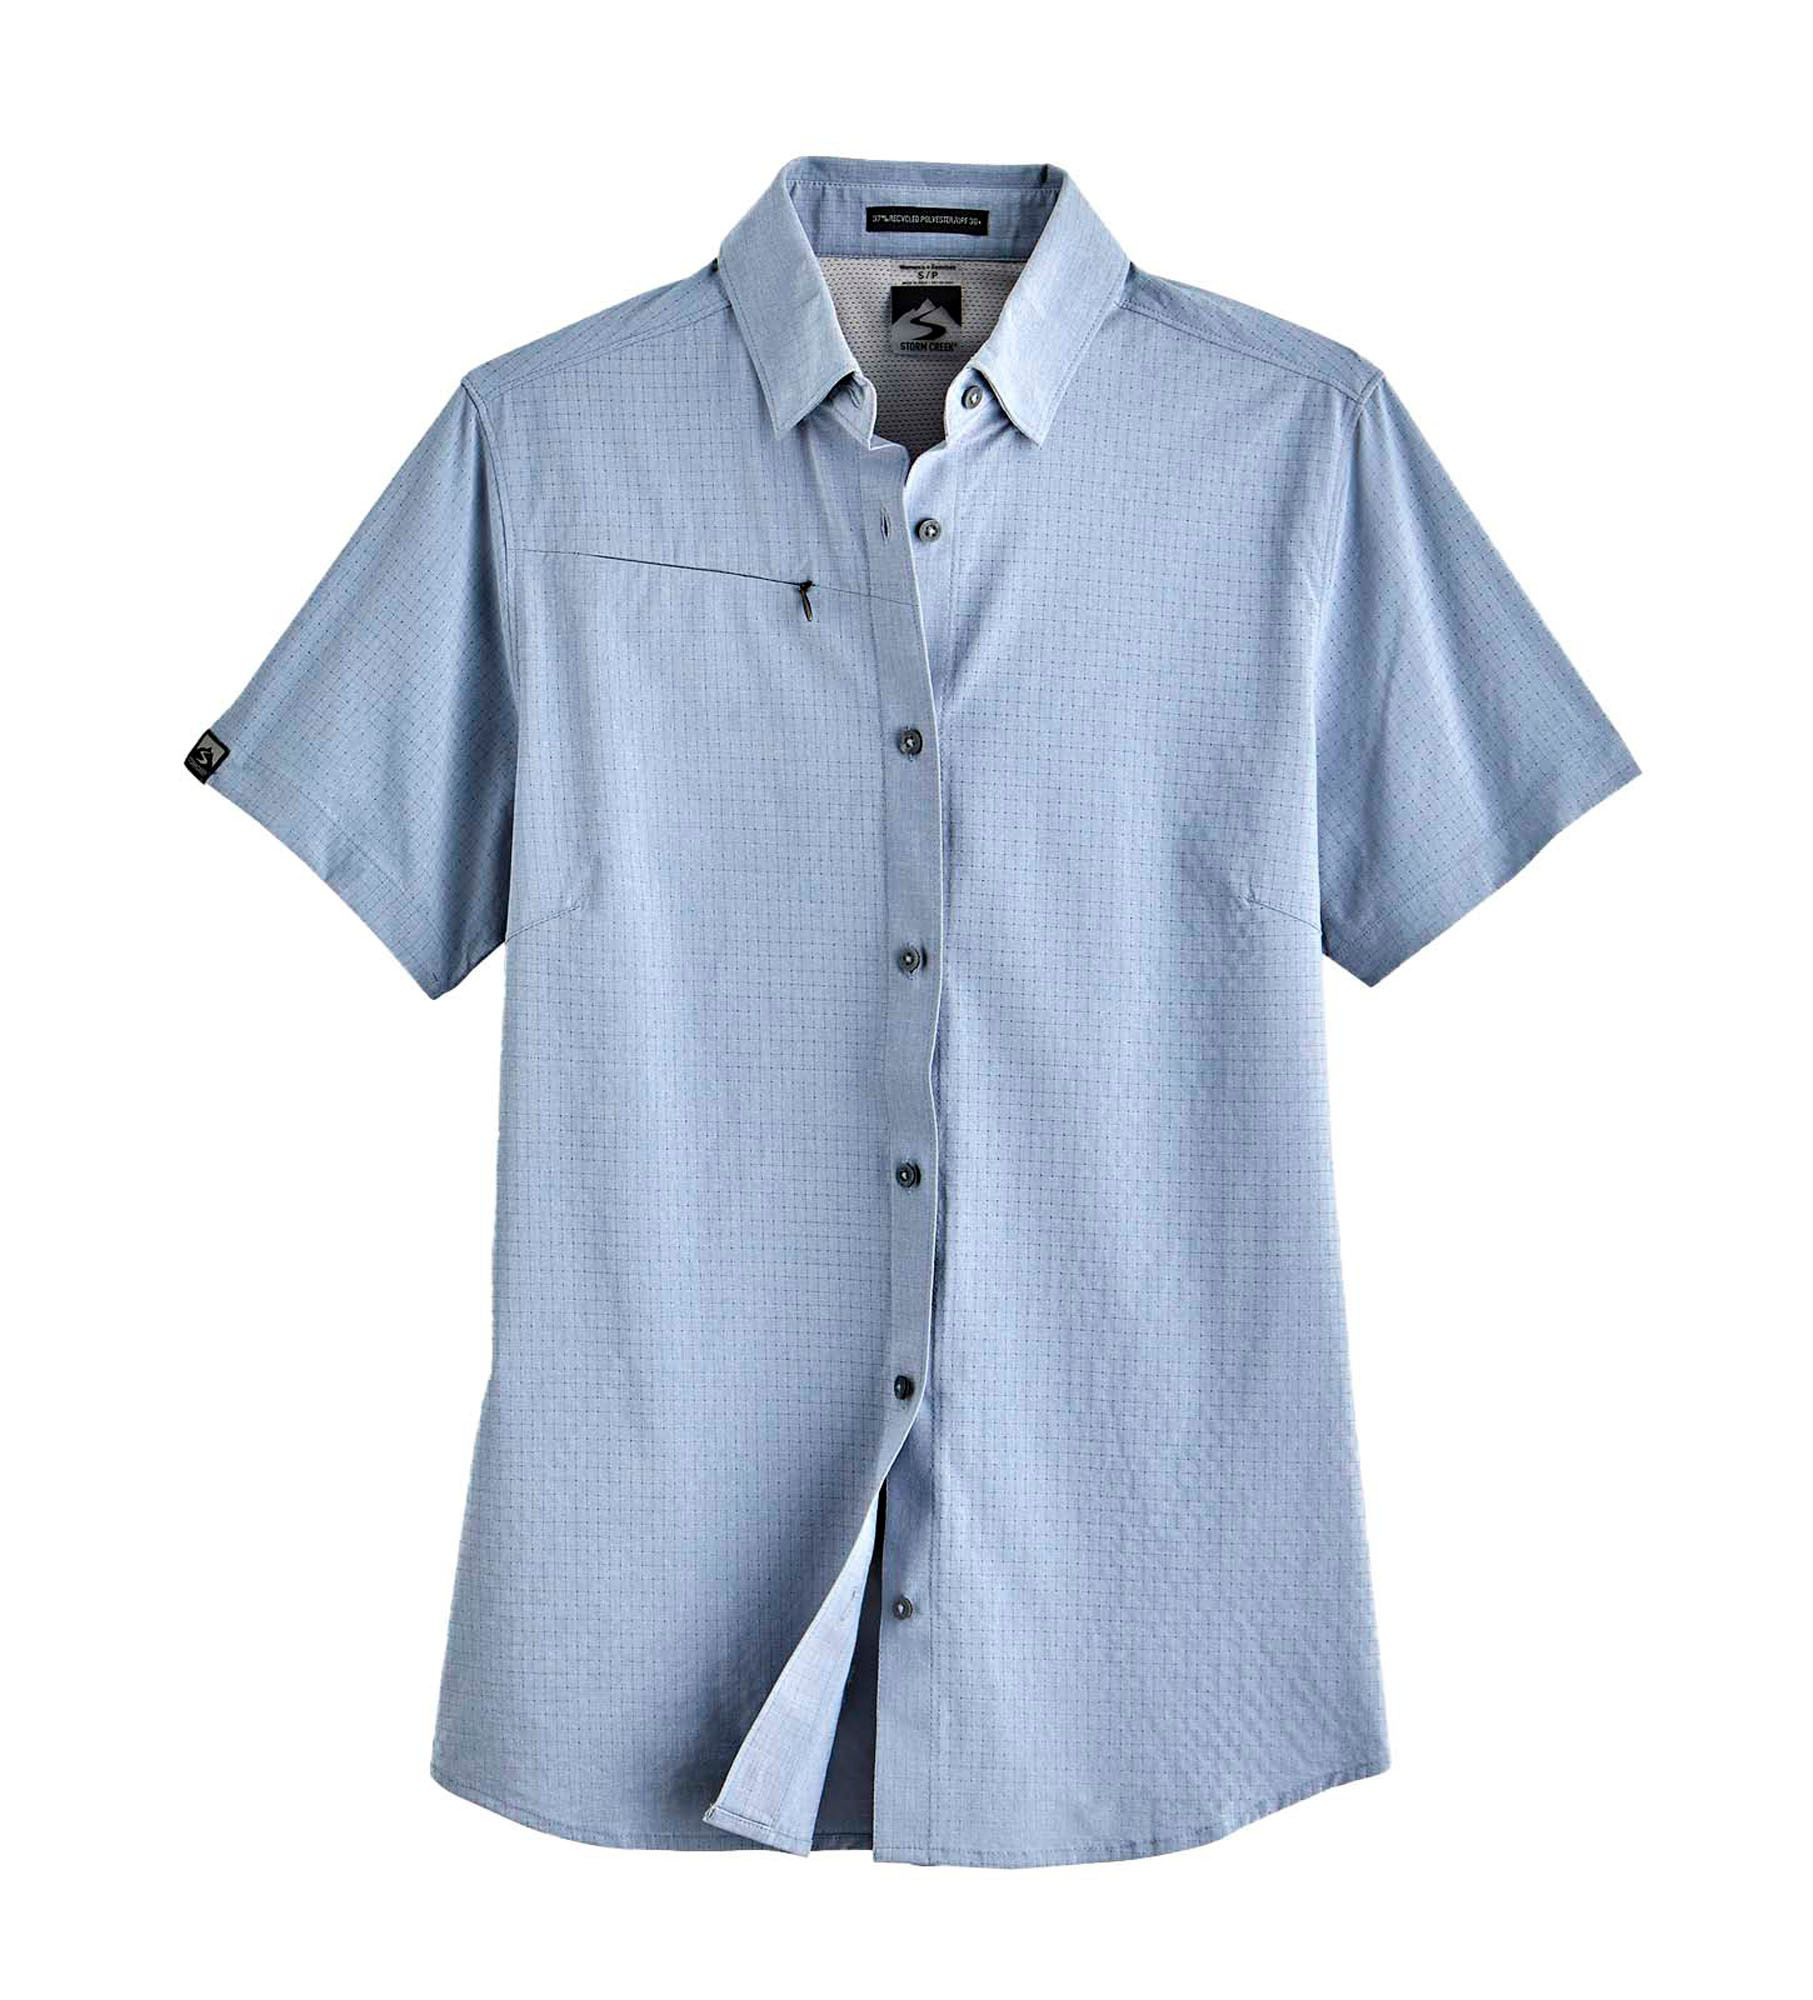 Storm Creek Naturalist Short-Sleeve Shirt for Ladies - Blue Mist - M